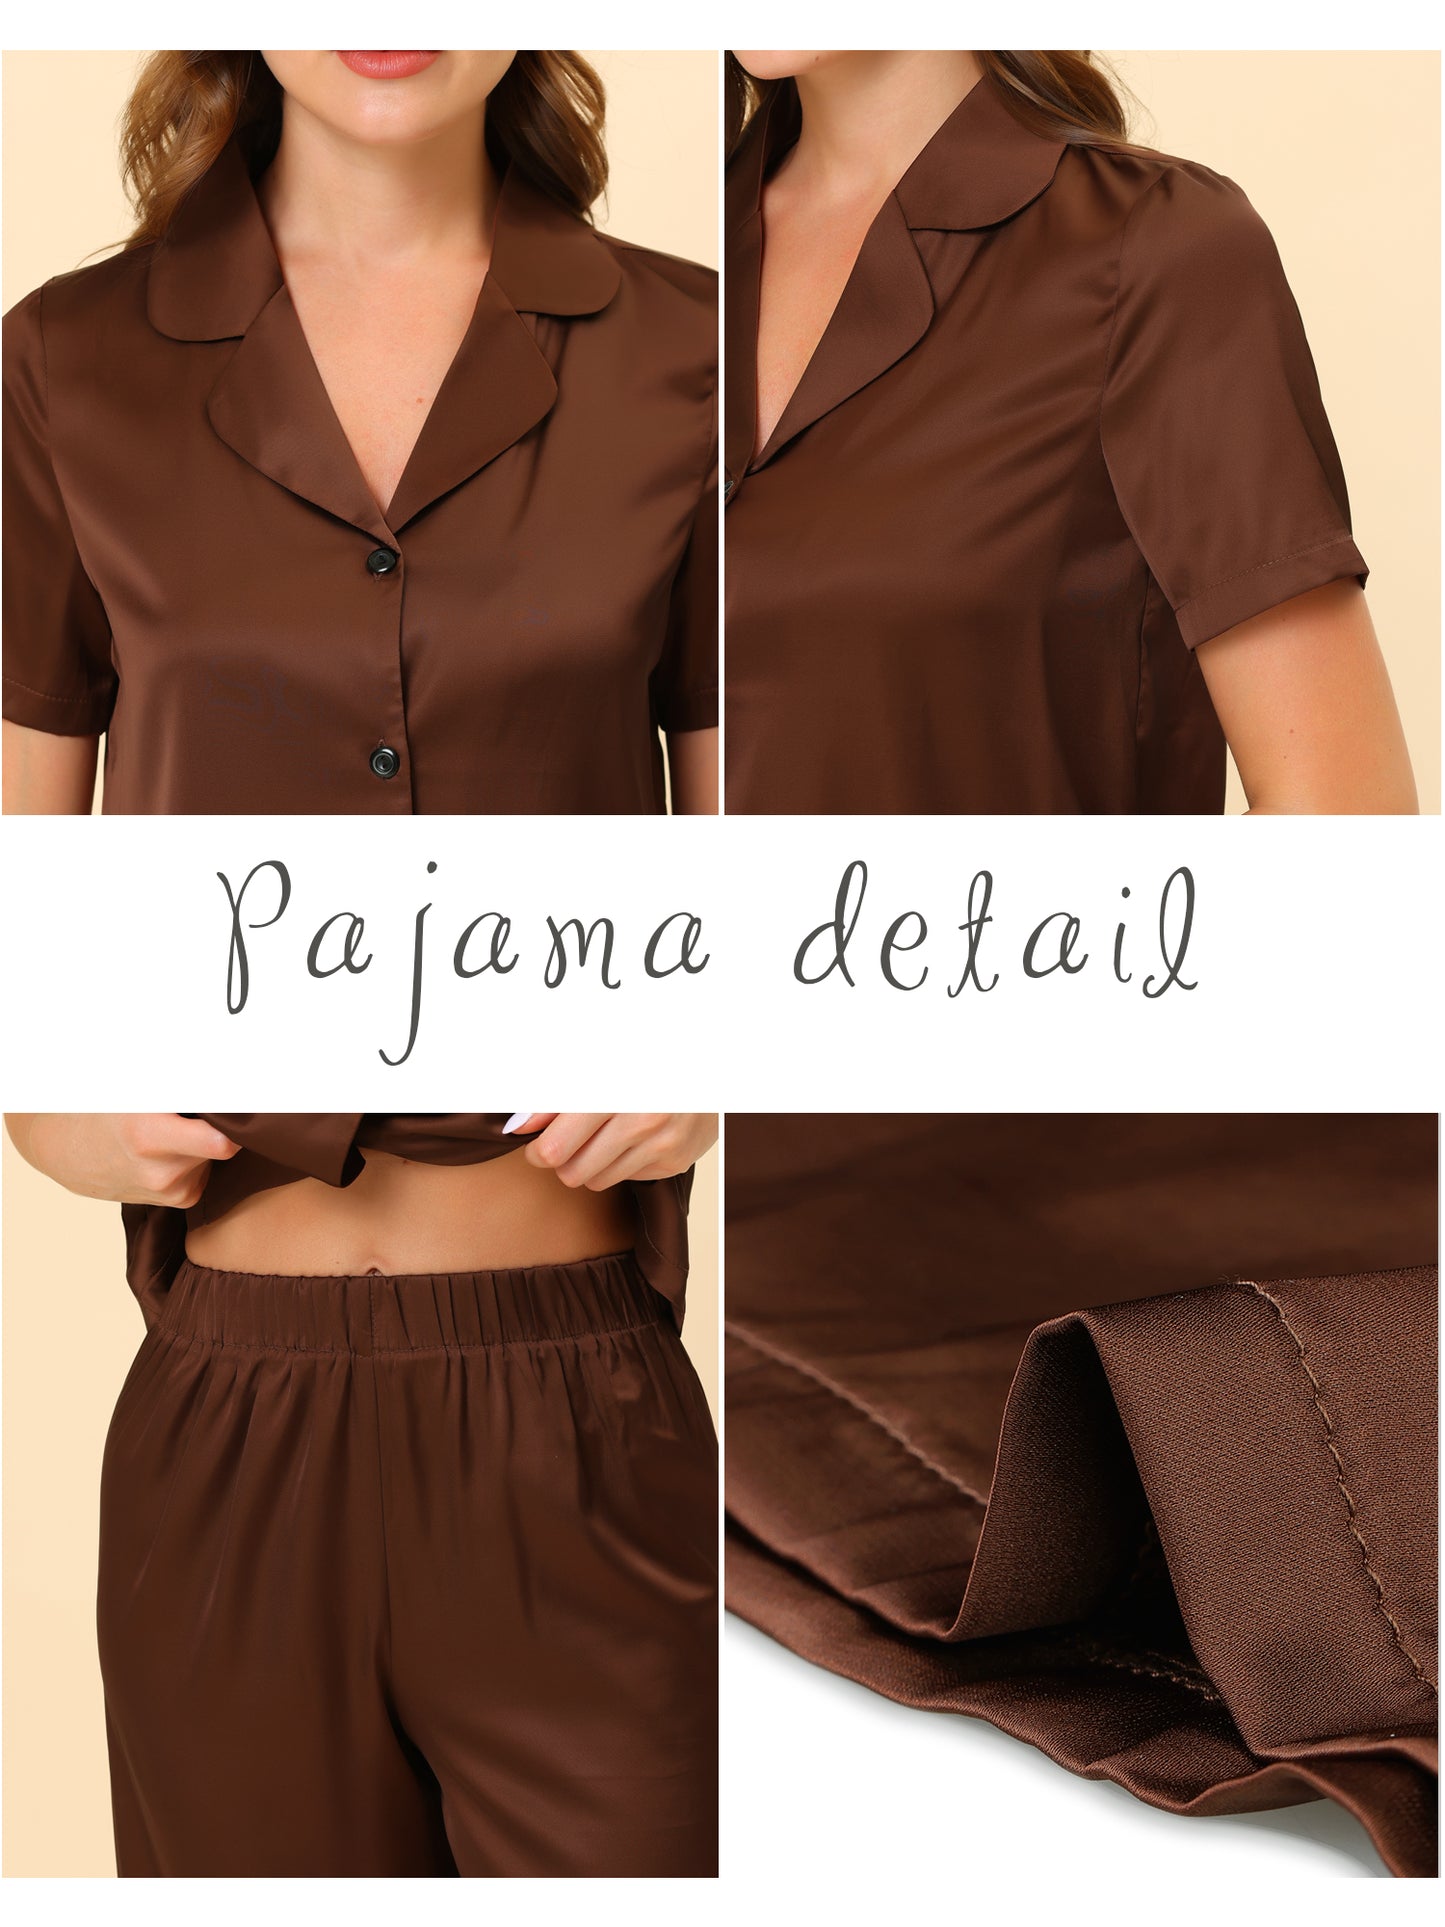 cheibear Pajama Loungewear Tops and Capri Pants Satin Sets Brown